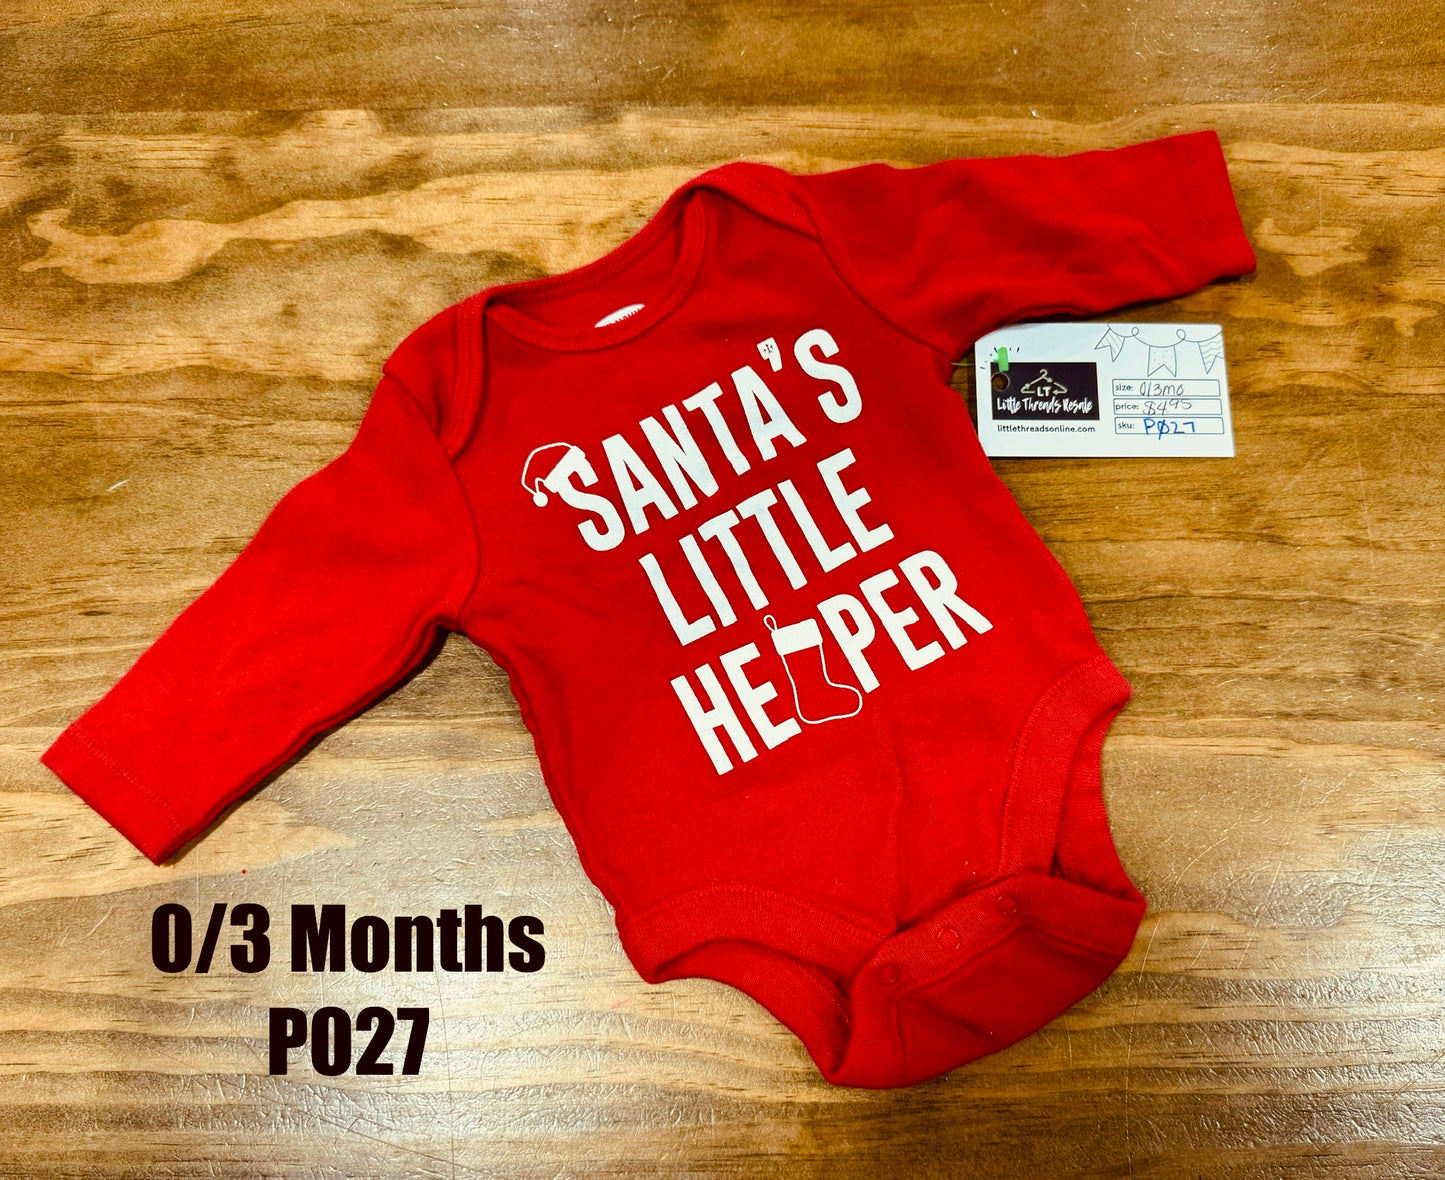 0/3 Month - Santa’s Helper Onesie